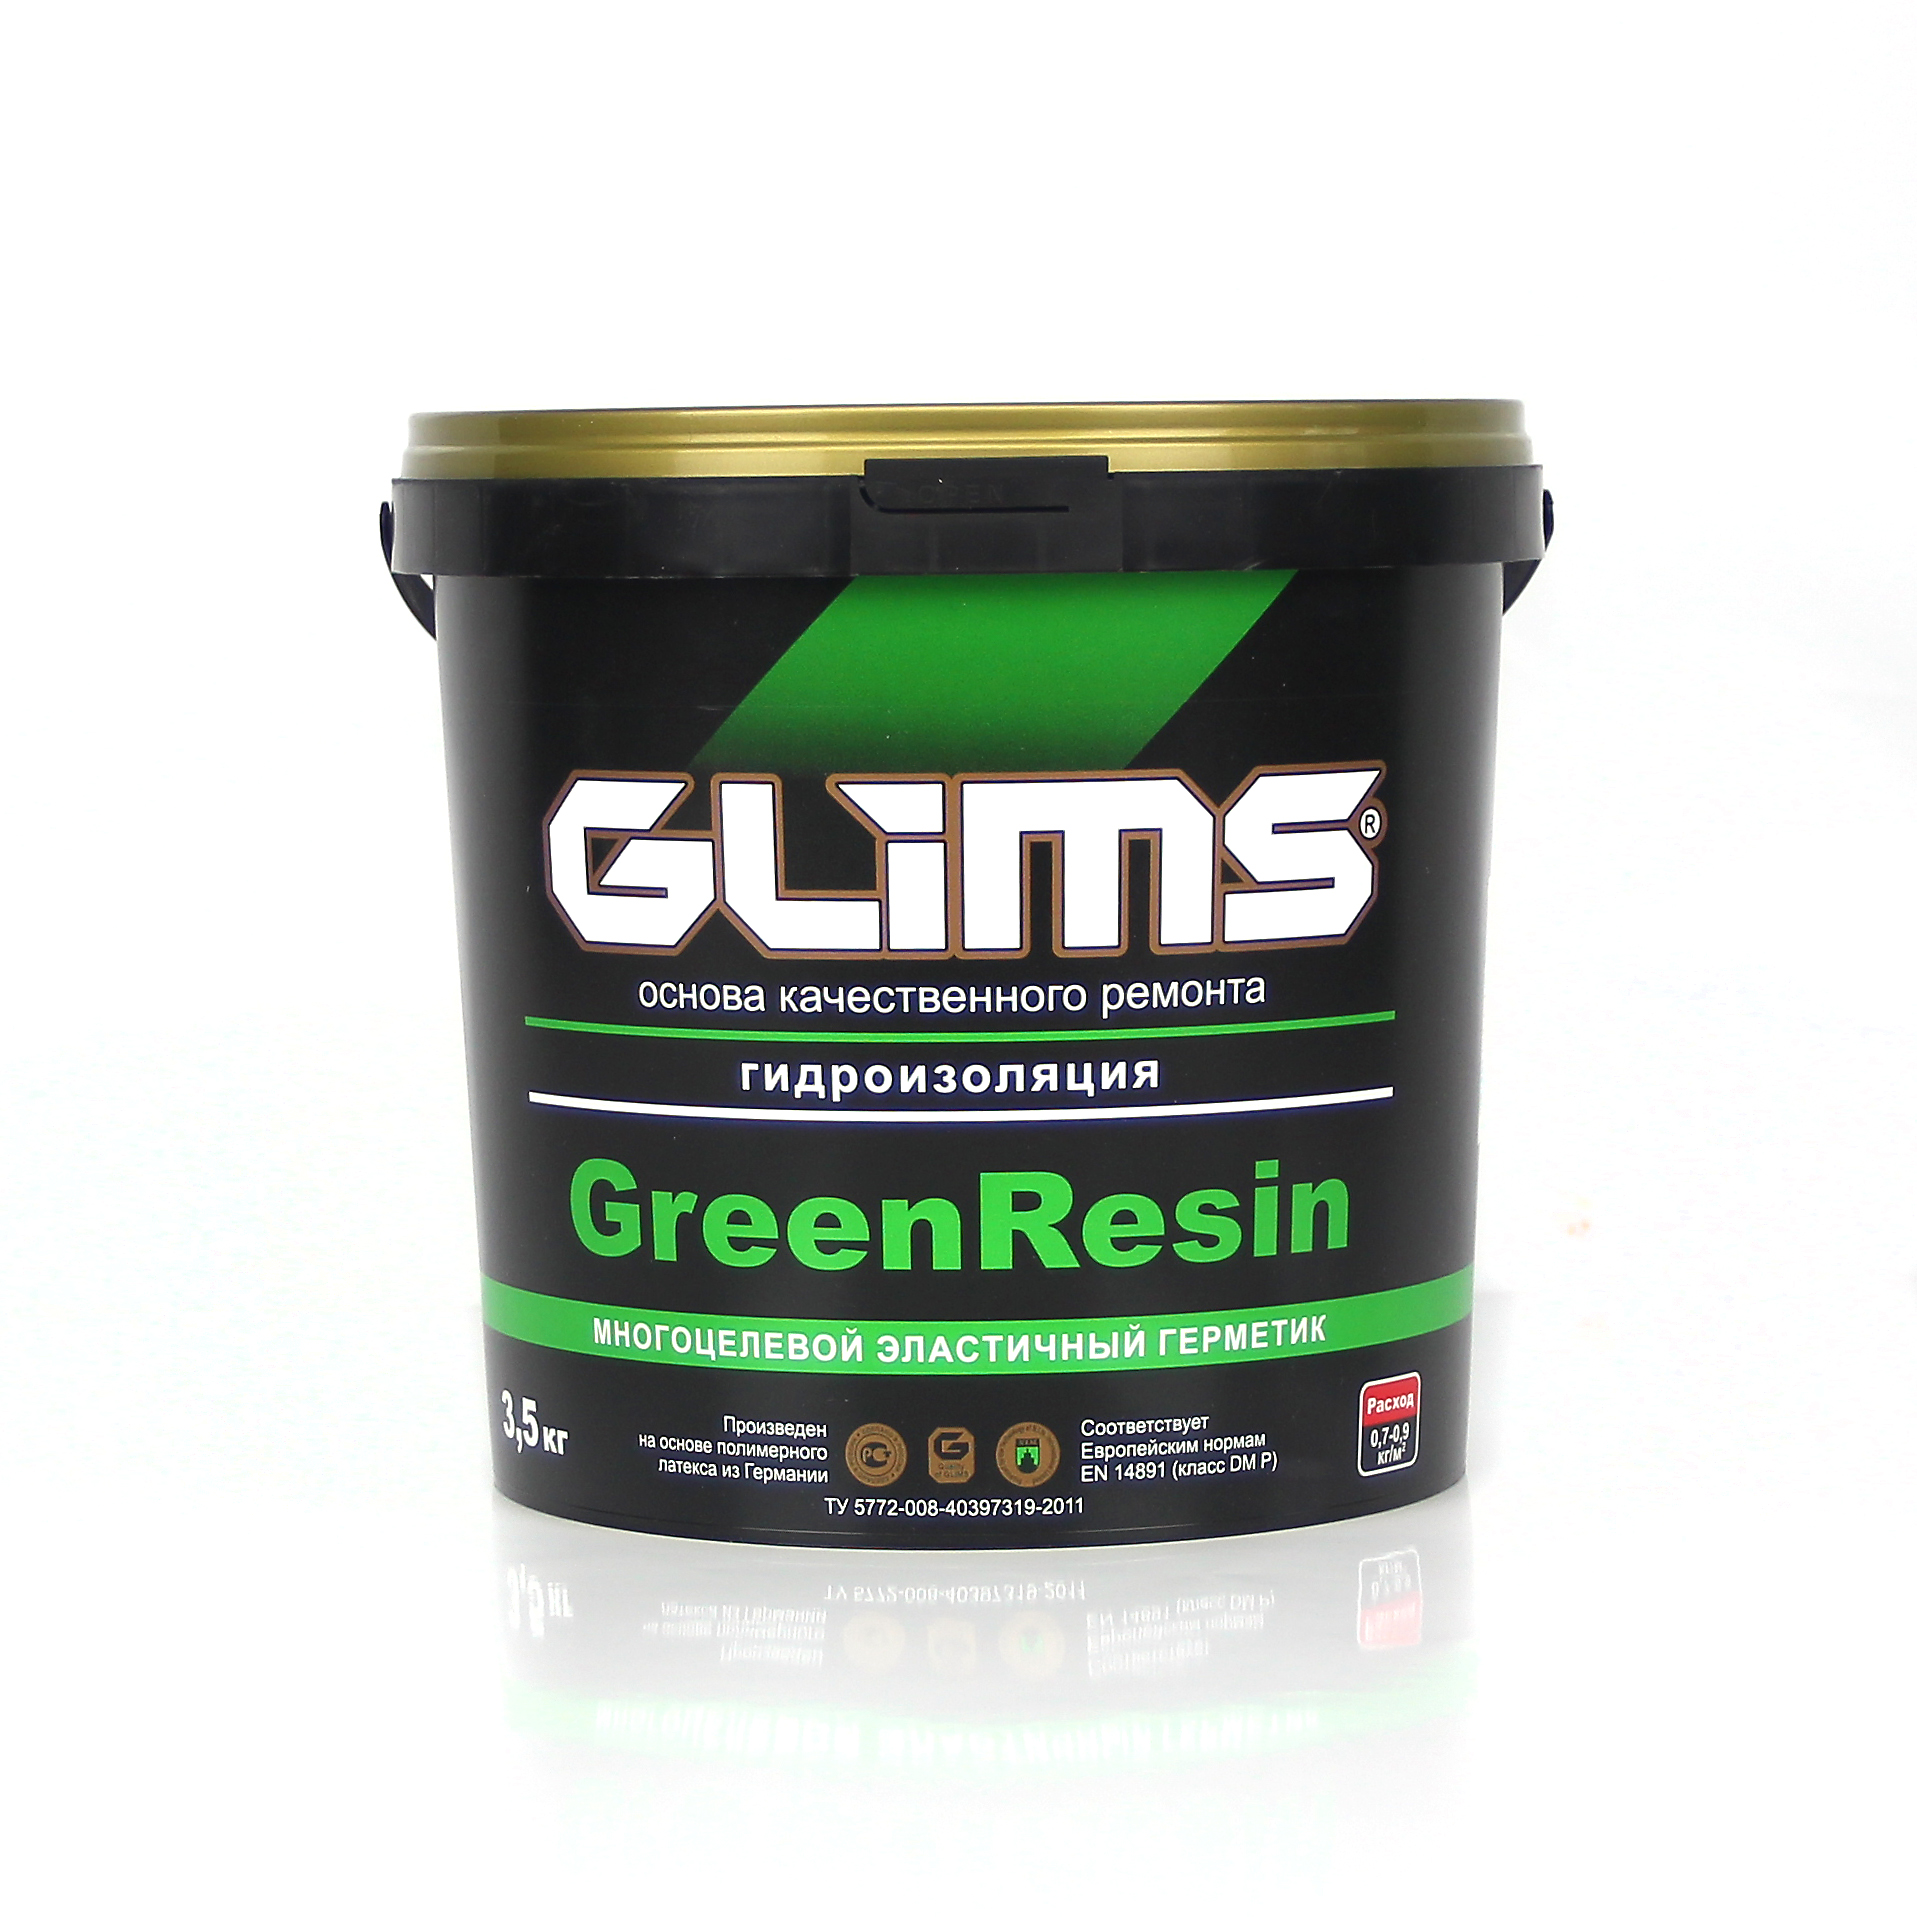 Гидроизоляция GLIMS GreenResin обмазочная на водной основе, 3.5 кг гидроизоляция эластичная glims greyresin для наружных работ 4 кг